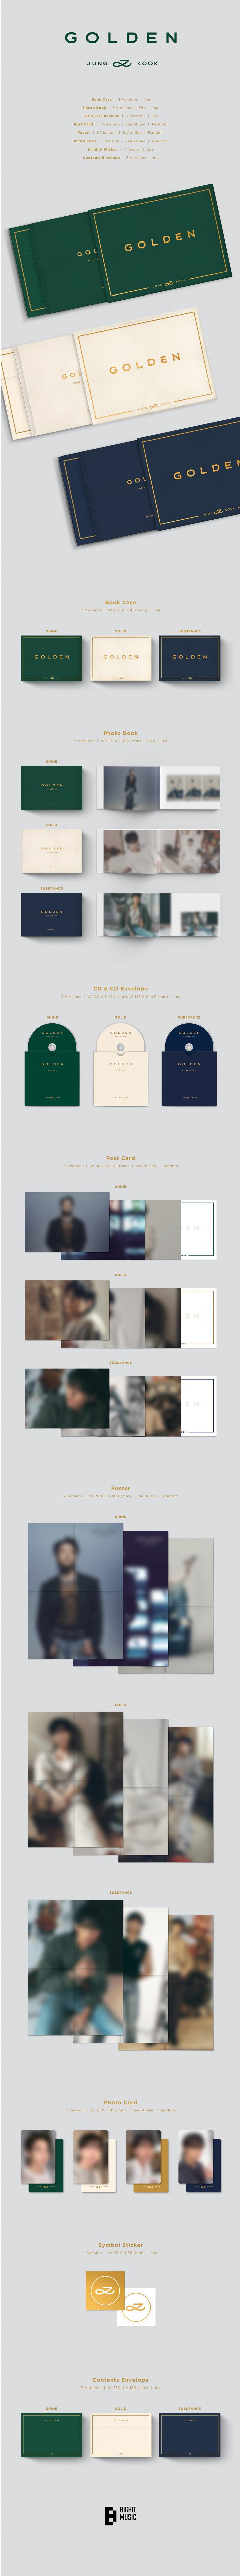 [PRE-ORDER] BTS JUNGKOOK - Solo Album GOLDEN 정국 솔로앨범 bts 방탄소년단 south korea giveaway kpopalbum shop store maknae 골든